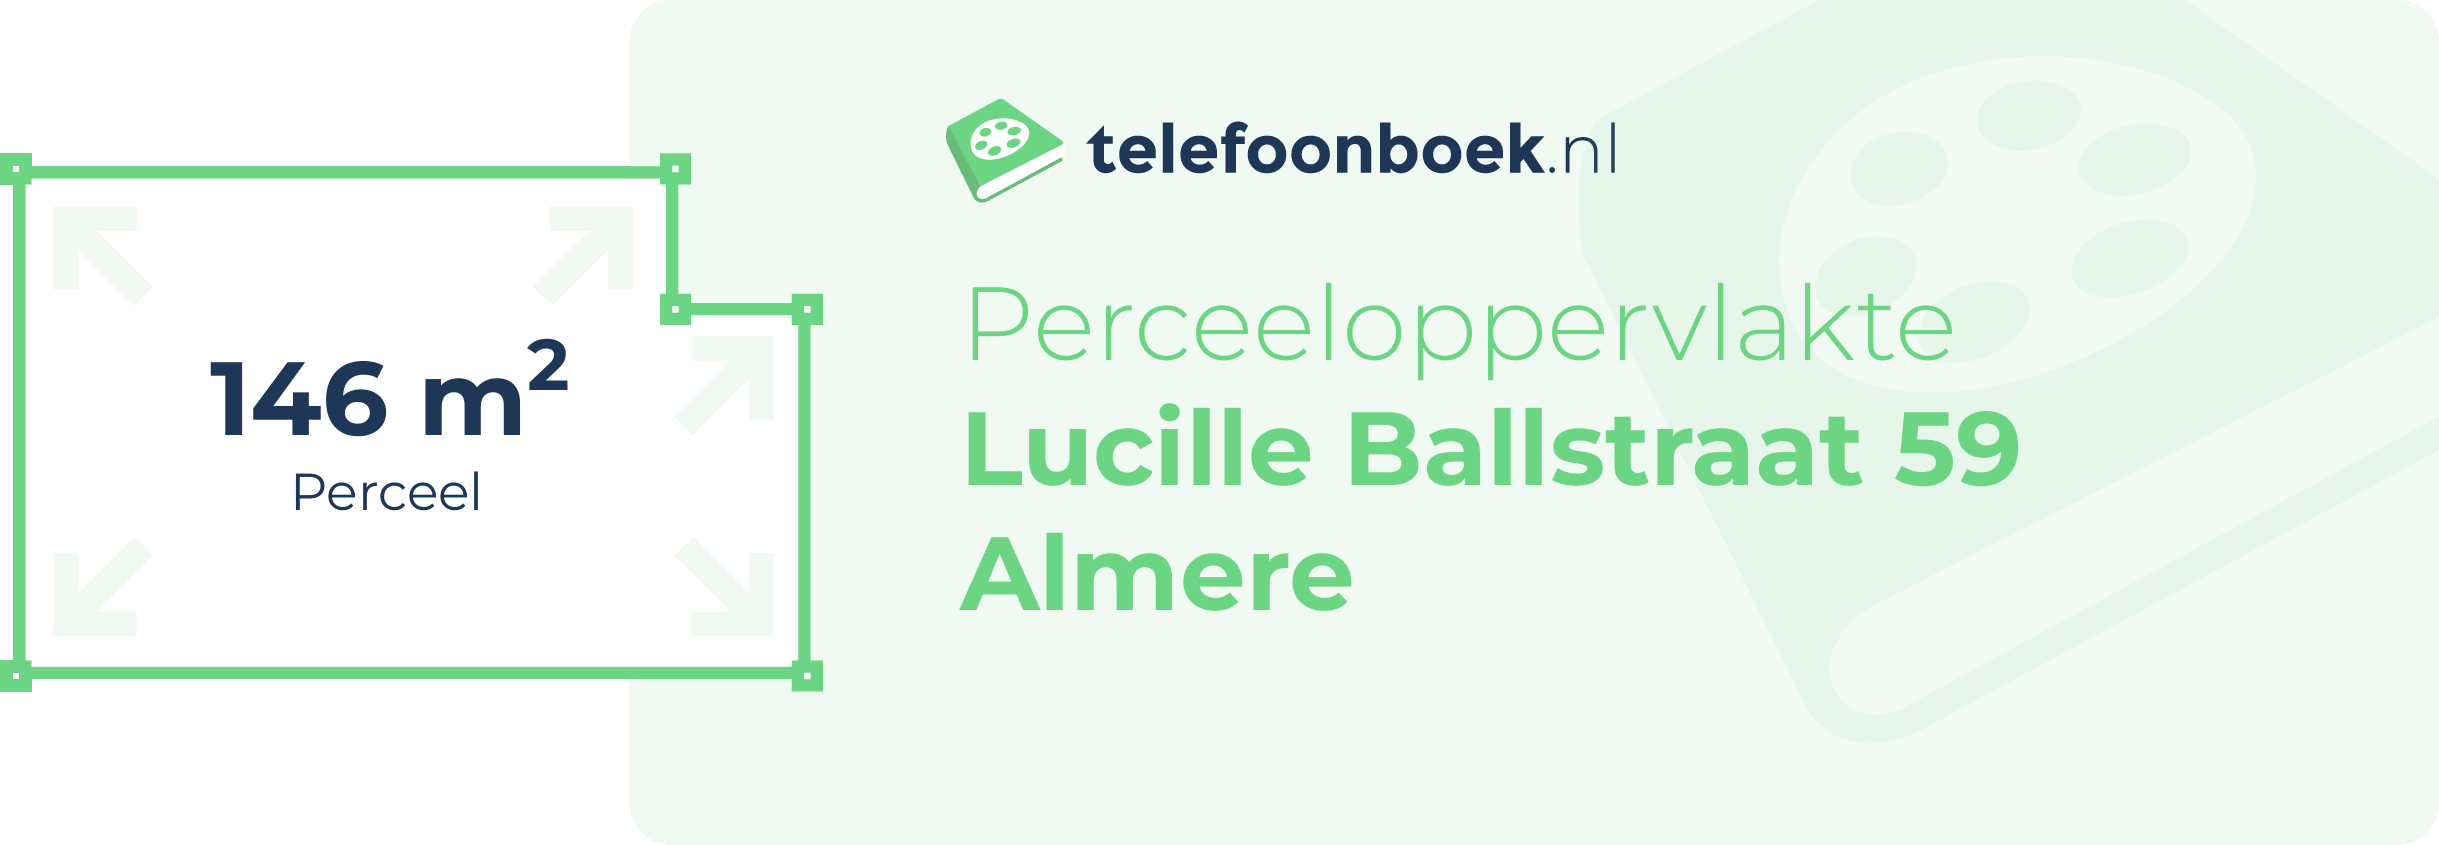 Perceeloppervlakte Lucille Ballstraat 59 Almere